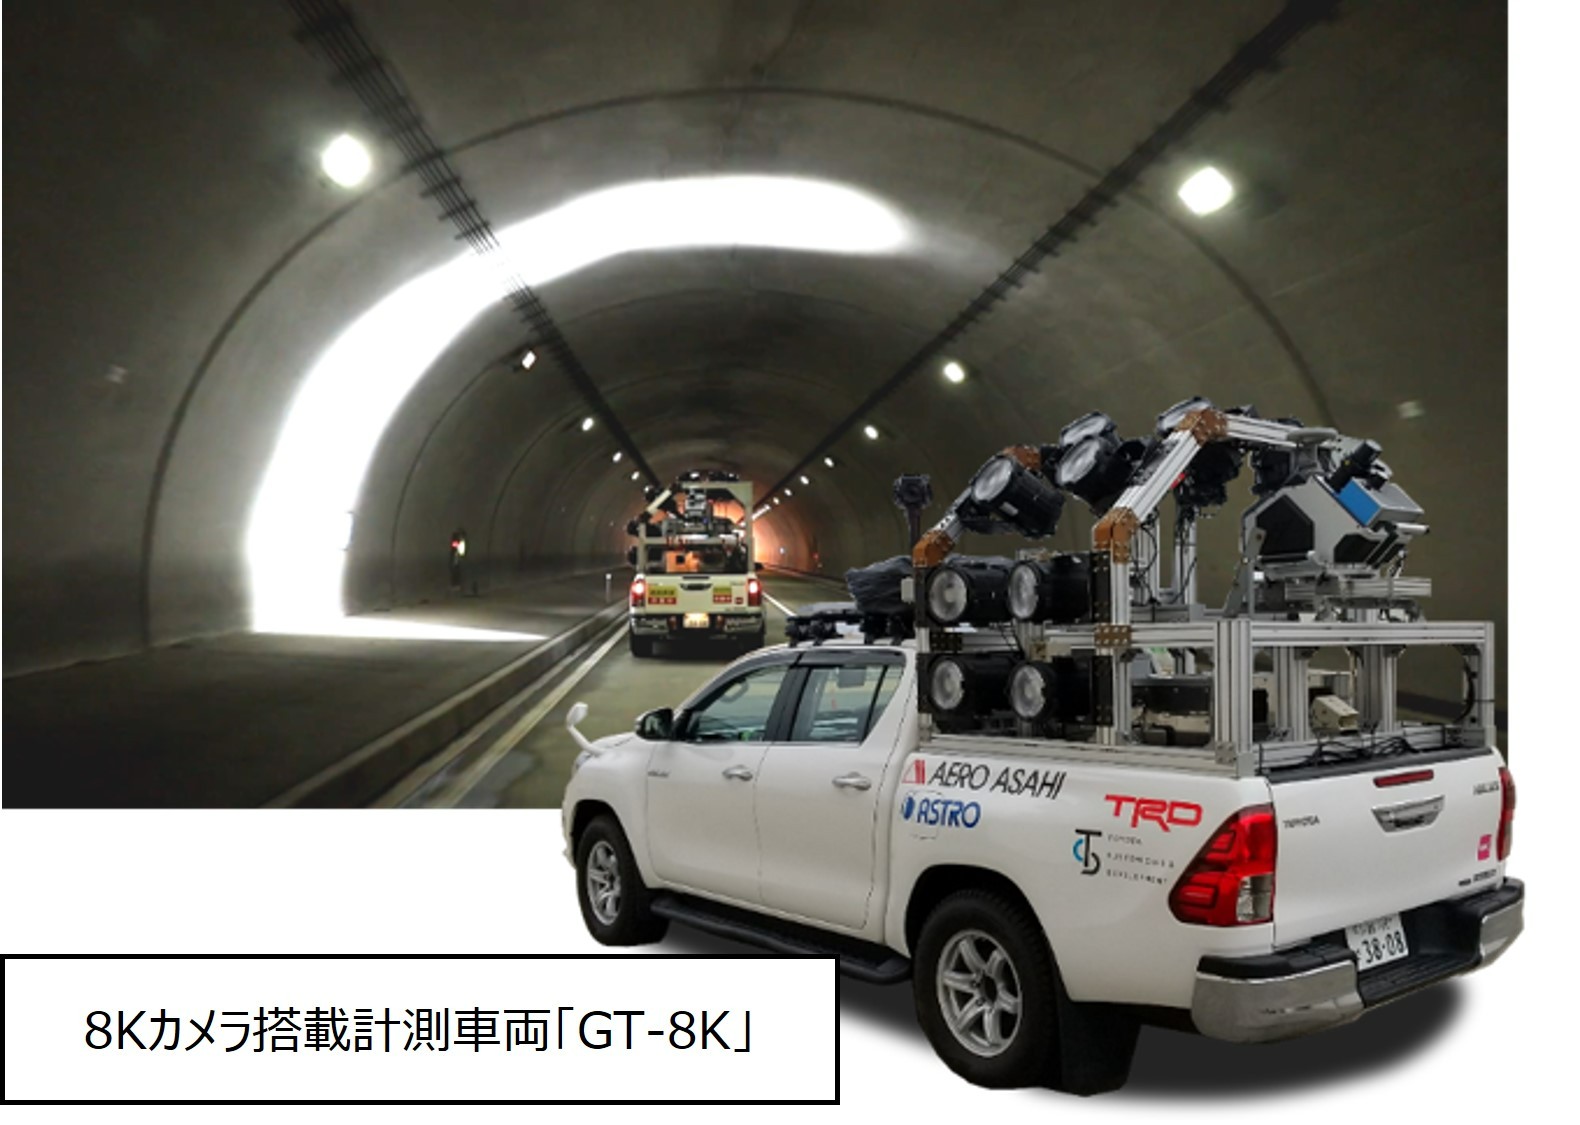 8Kカメラ搭載計測車両「GT-8K」